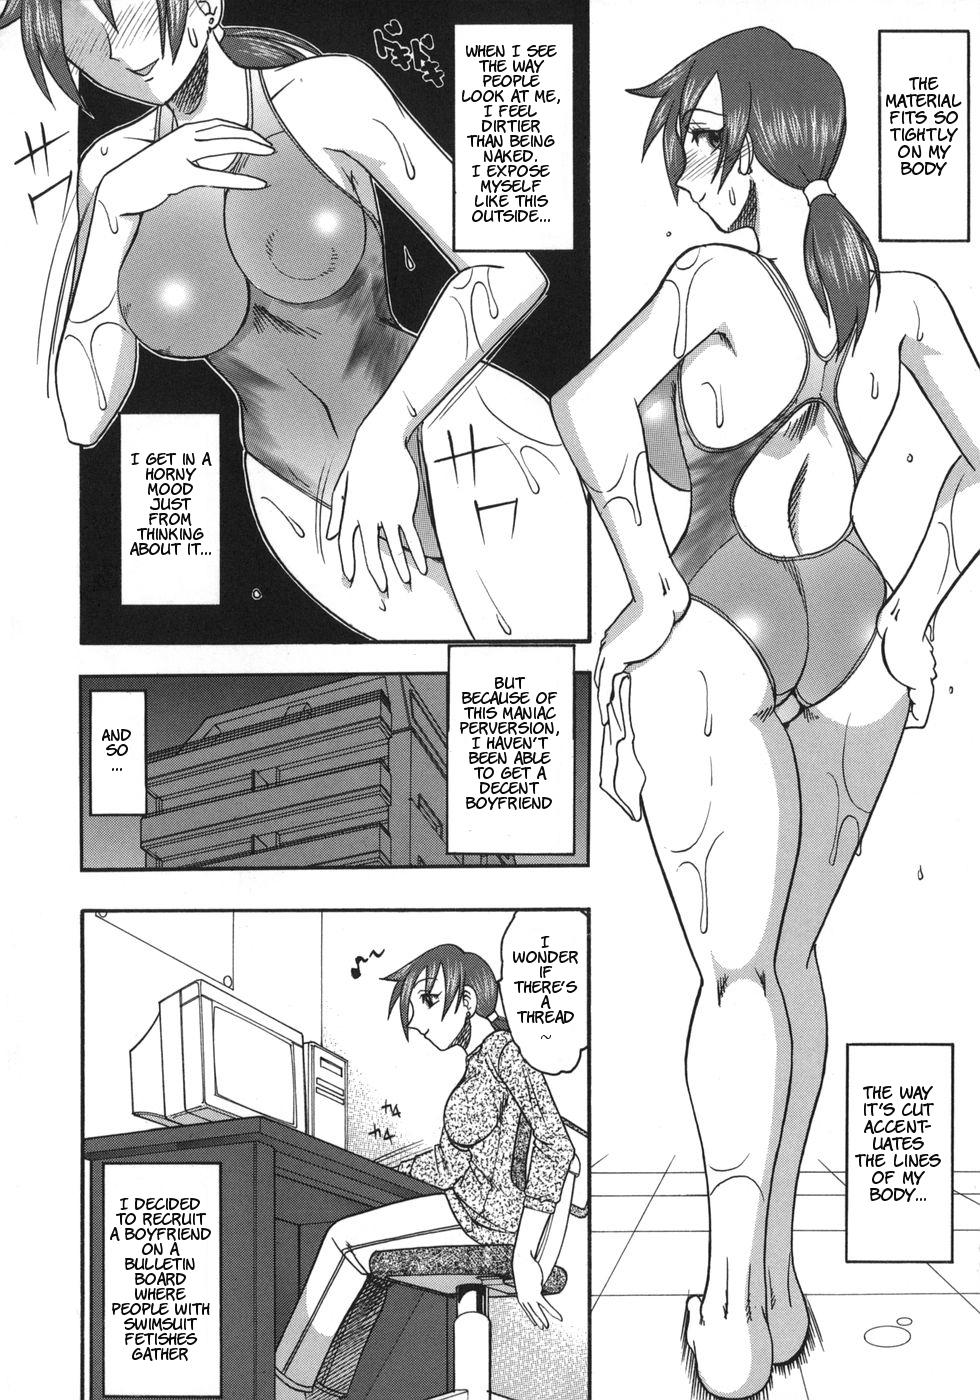 Twerking Hadaka Yori Hiwai - She is dirtier than nakedness Pussylicking - Page 10